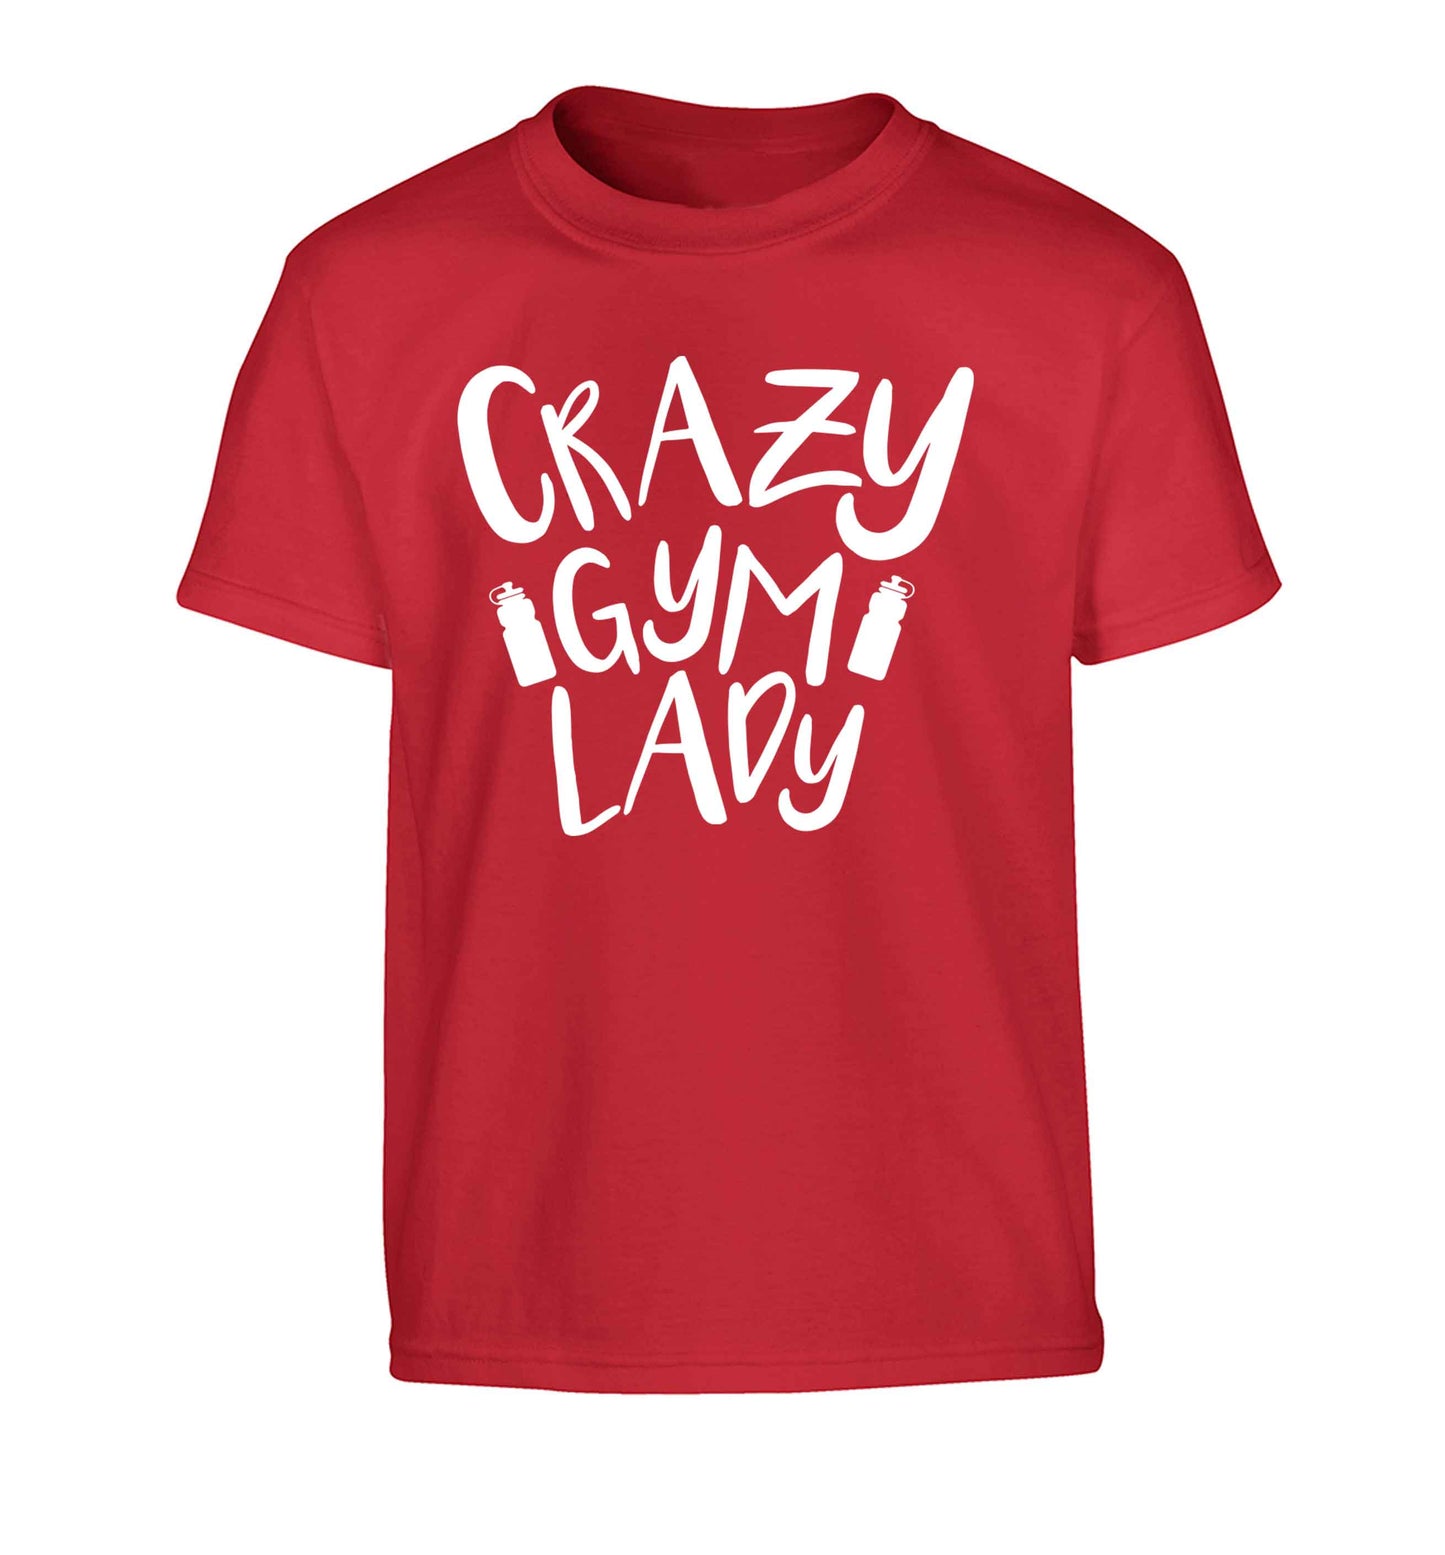 Crazy gym lady Children's red Tshirt 12-13 Years